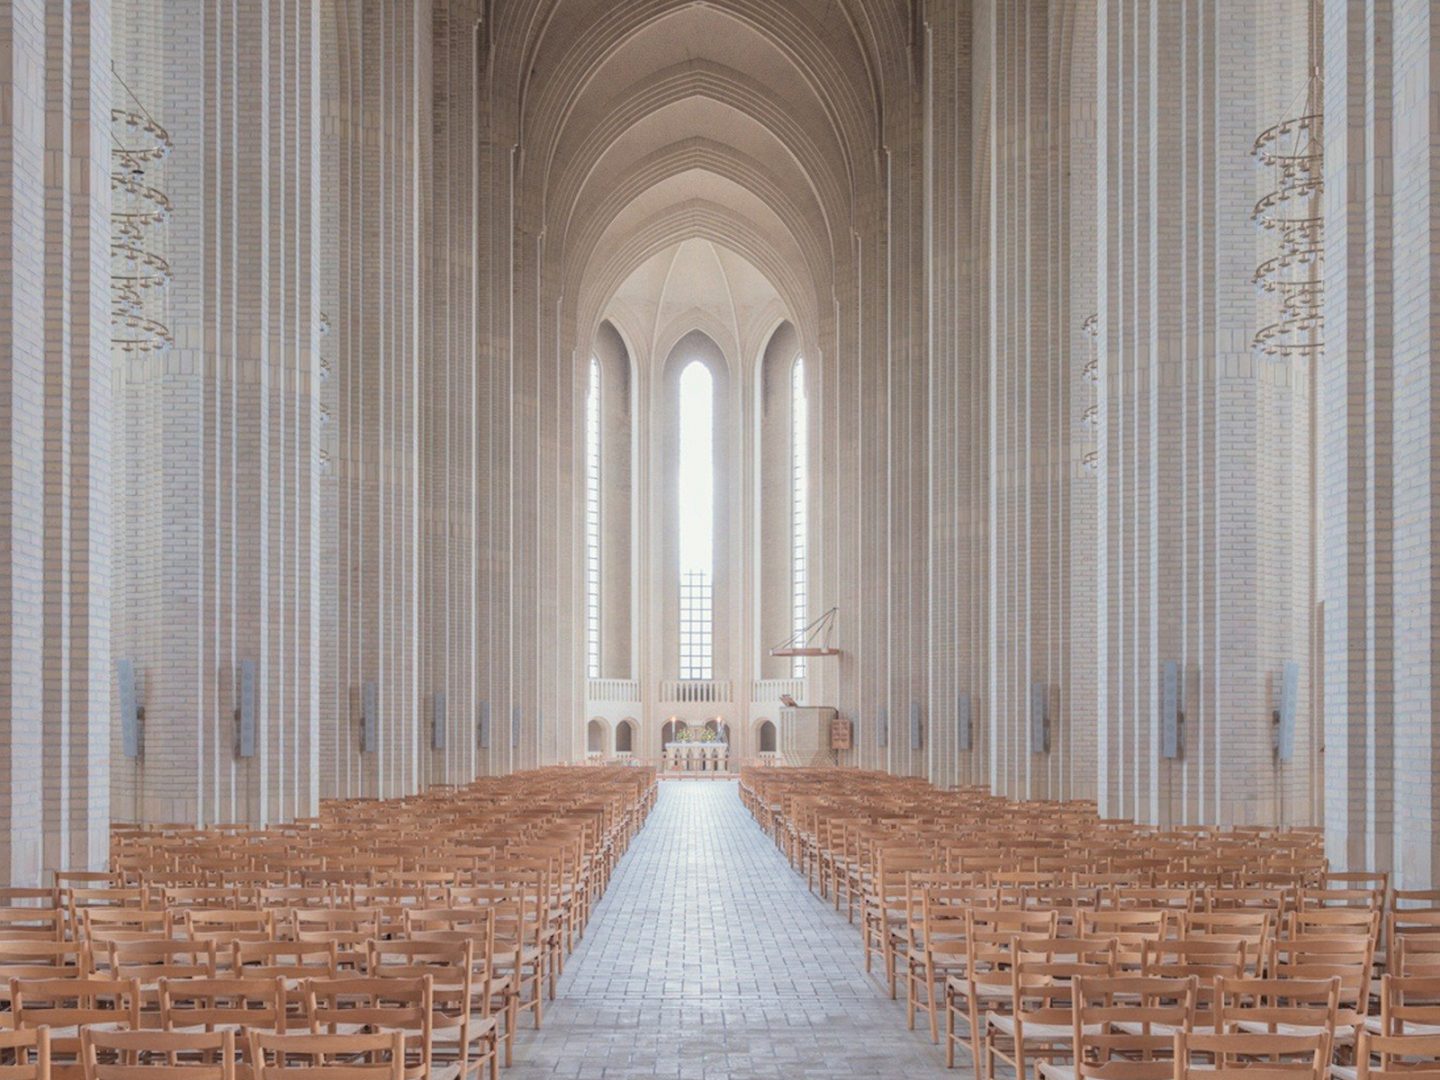 ignant-photography-ludwig-favre-copenhagen-church-02